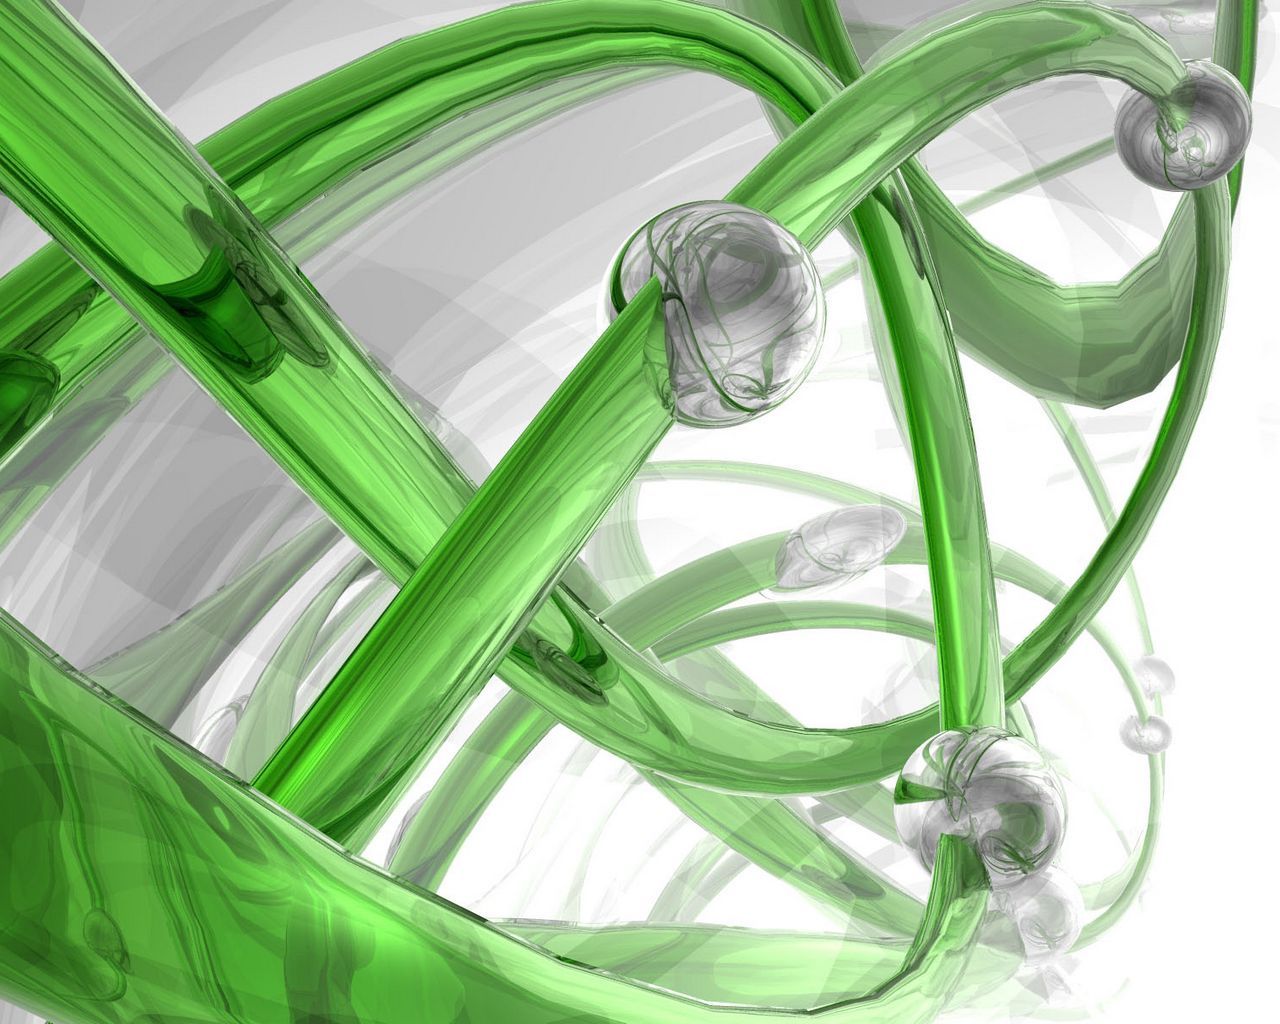 Download wallpaper 1280x1024 3D, spiral, glass, green, white standard 5:4 HD background